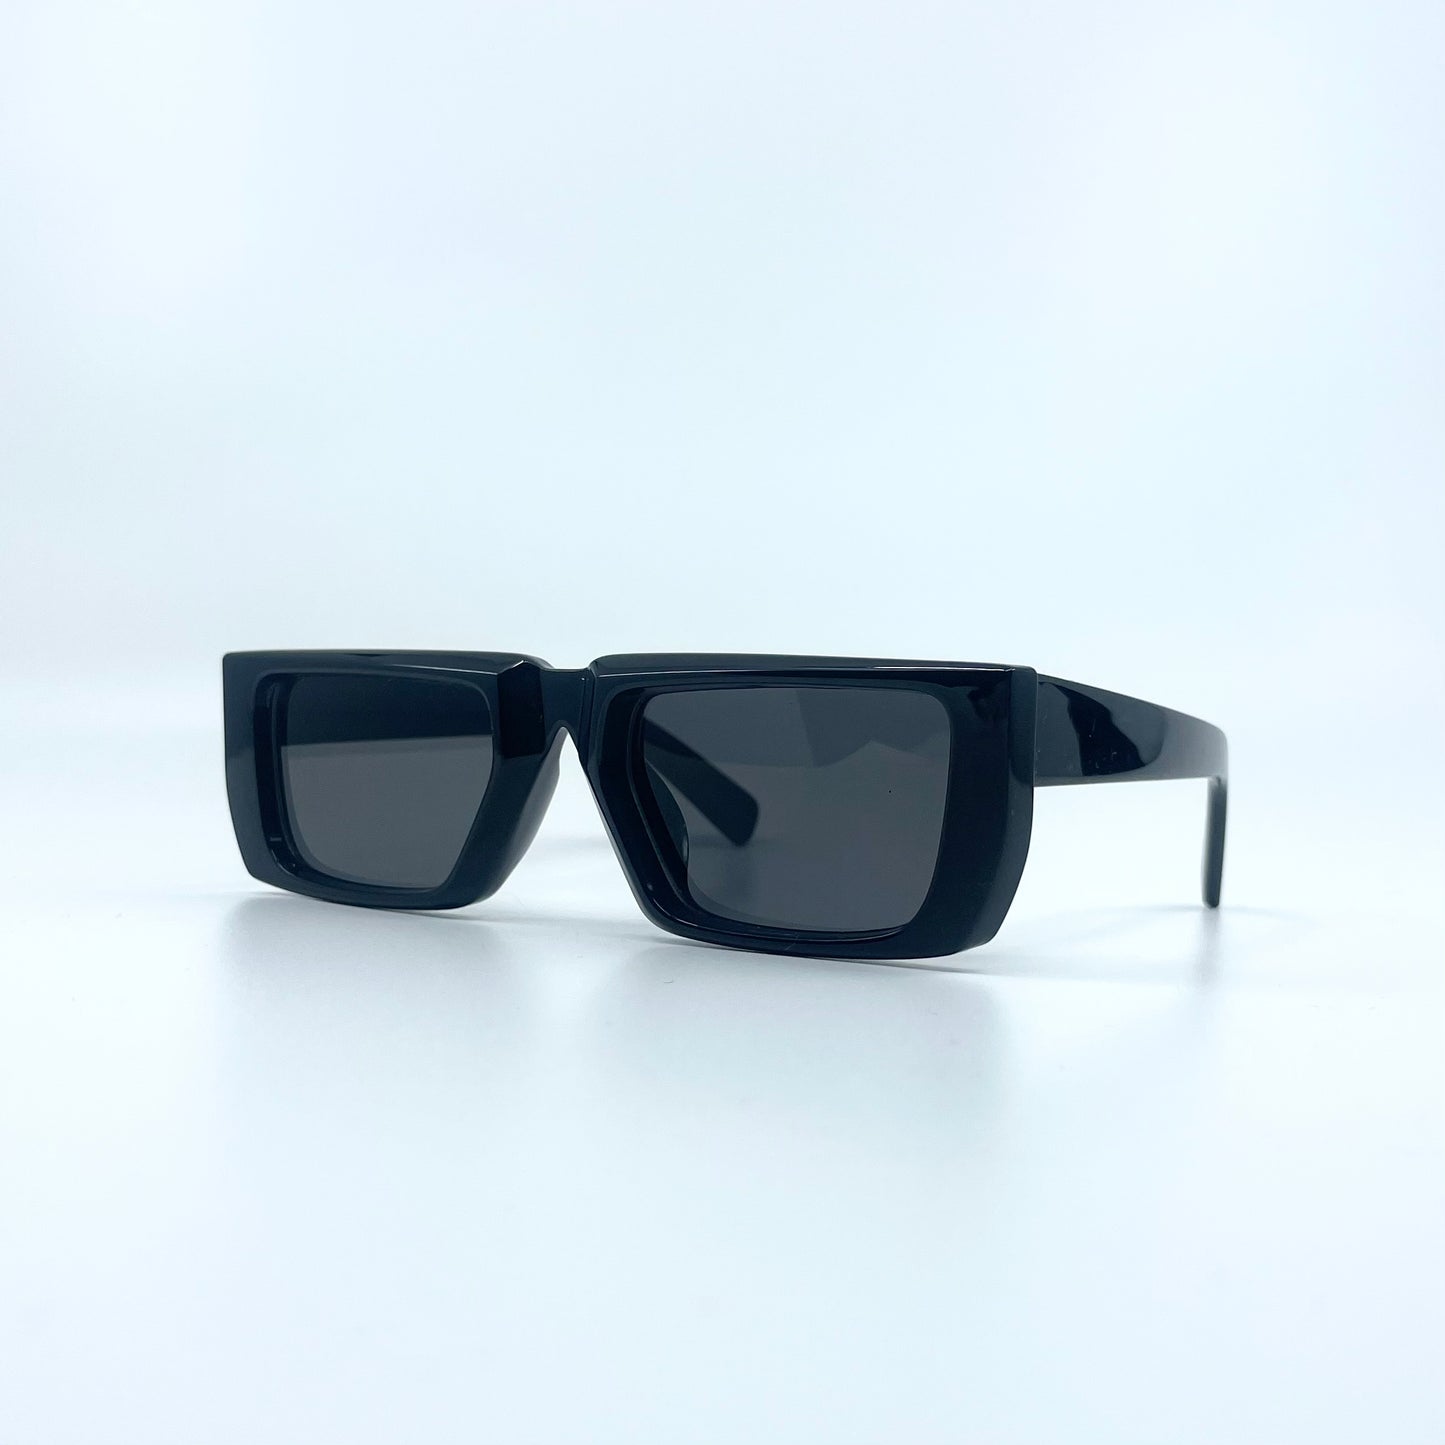 “Low Key” Sunglasses